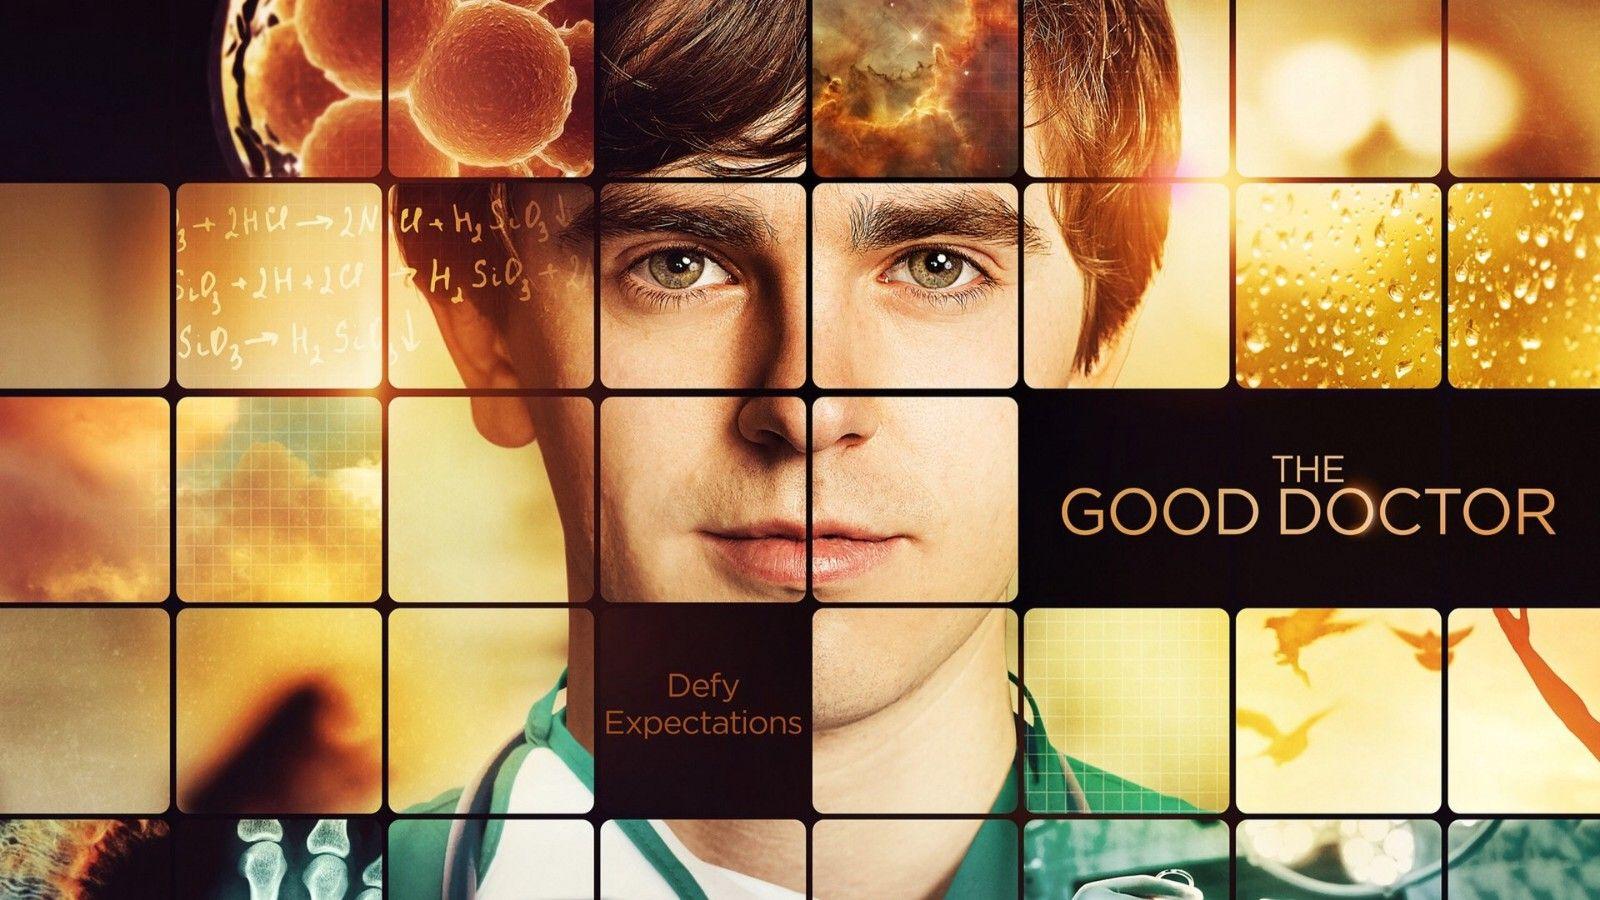 The Good Doctor Season 1 Episode 16 Full HD 1080p